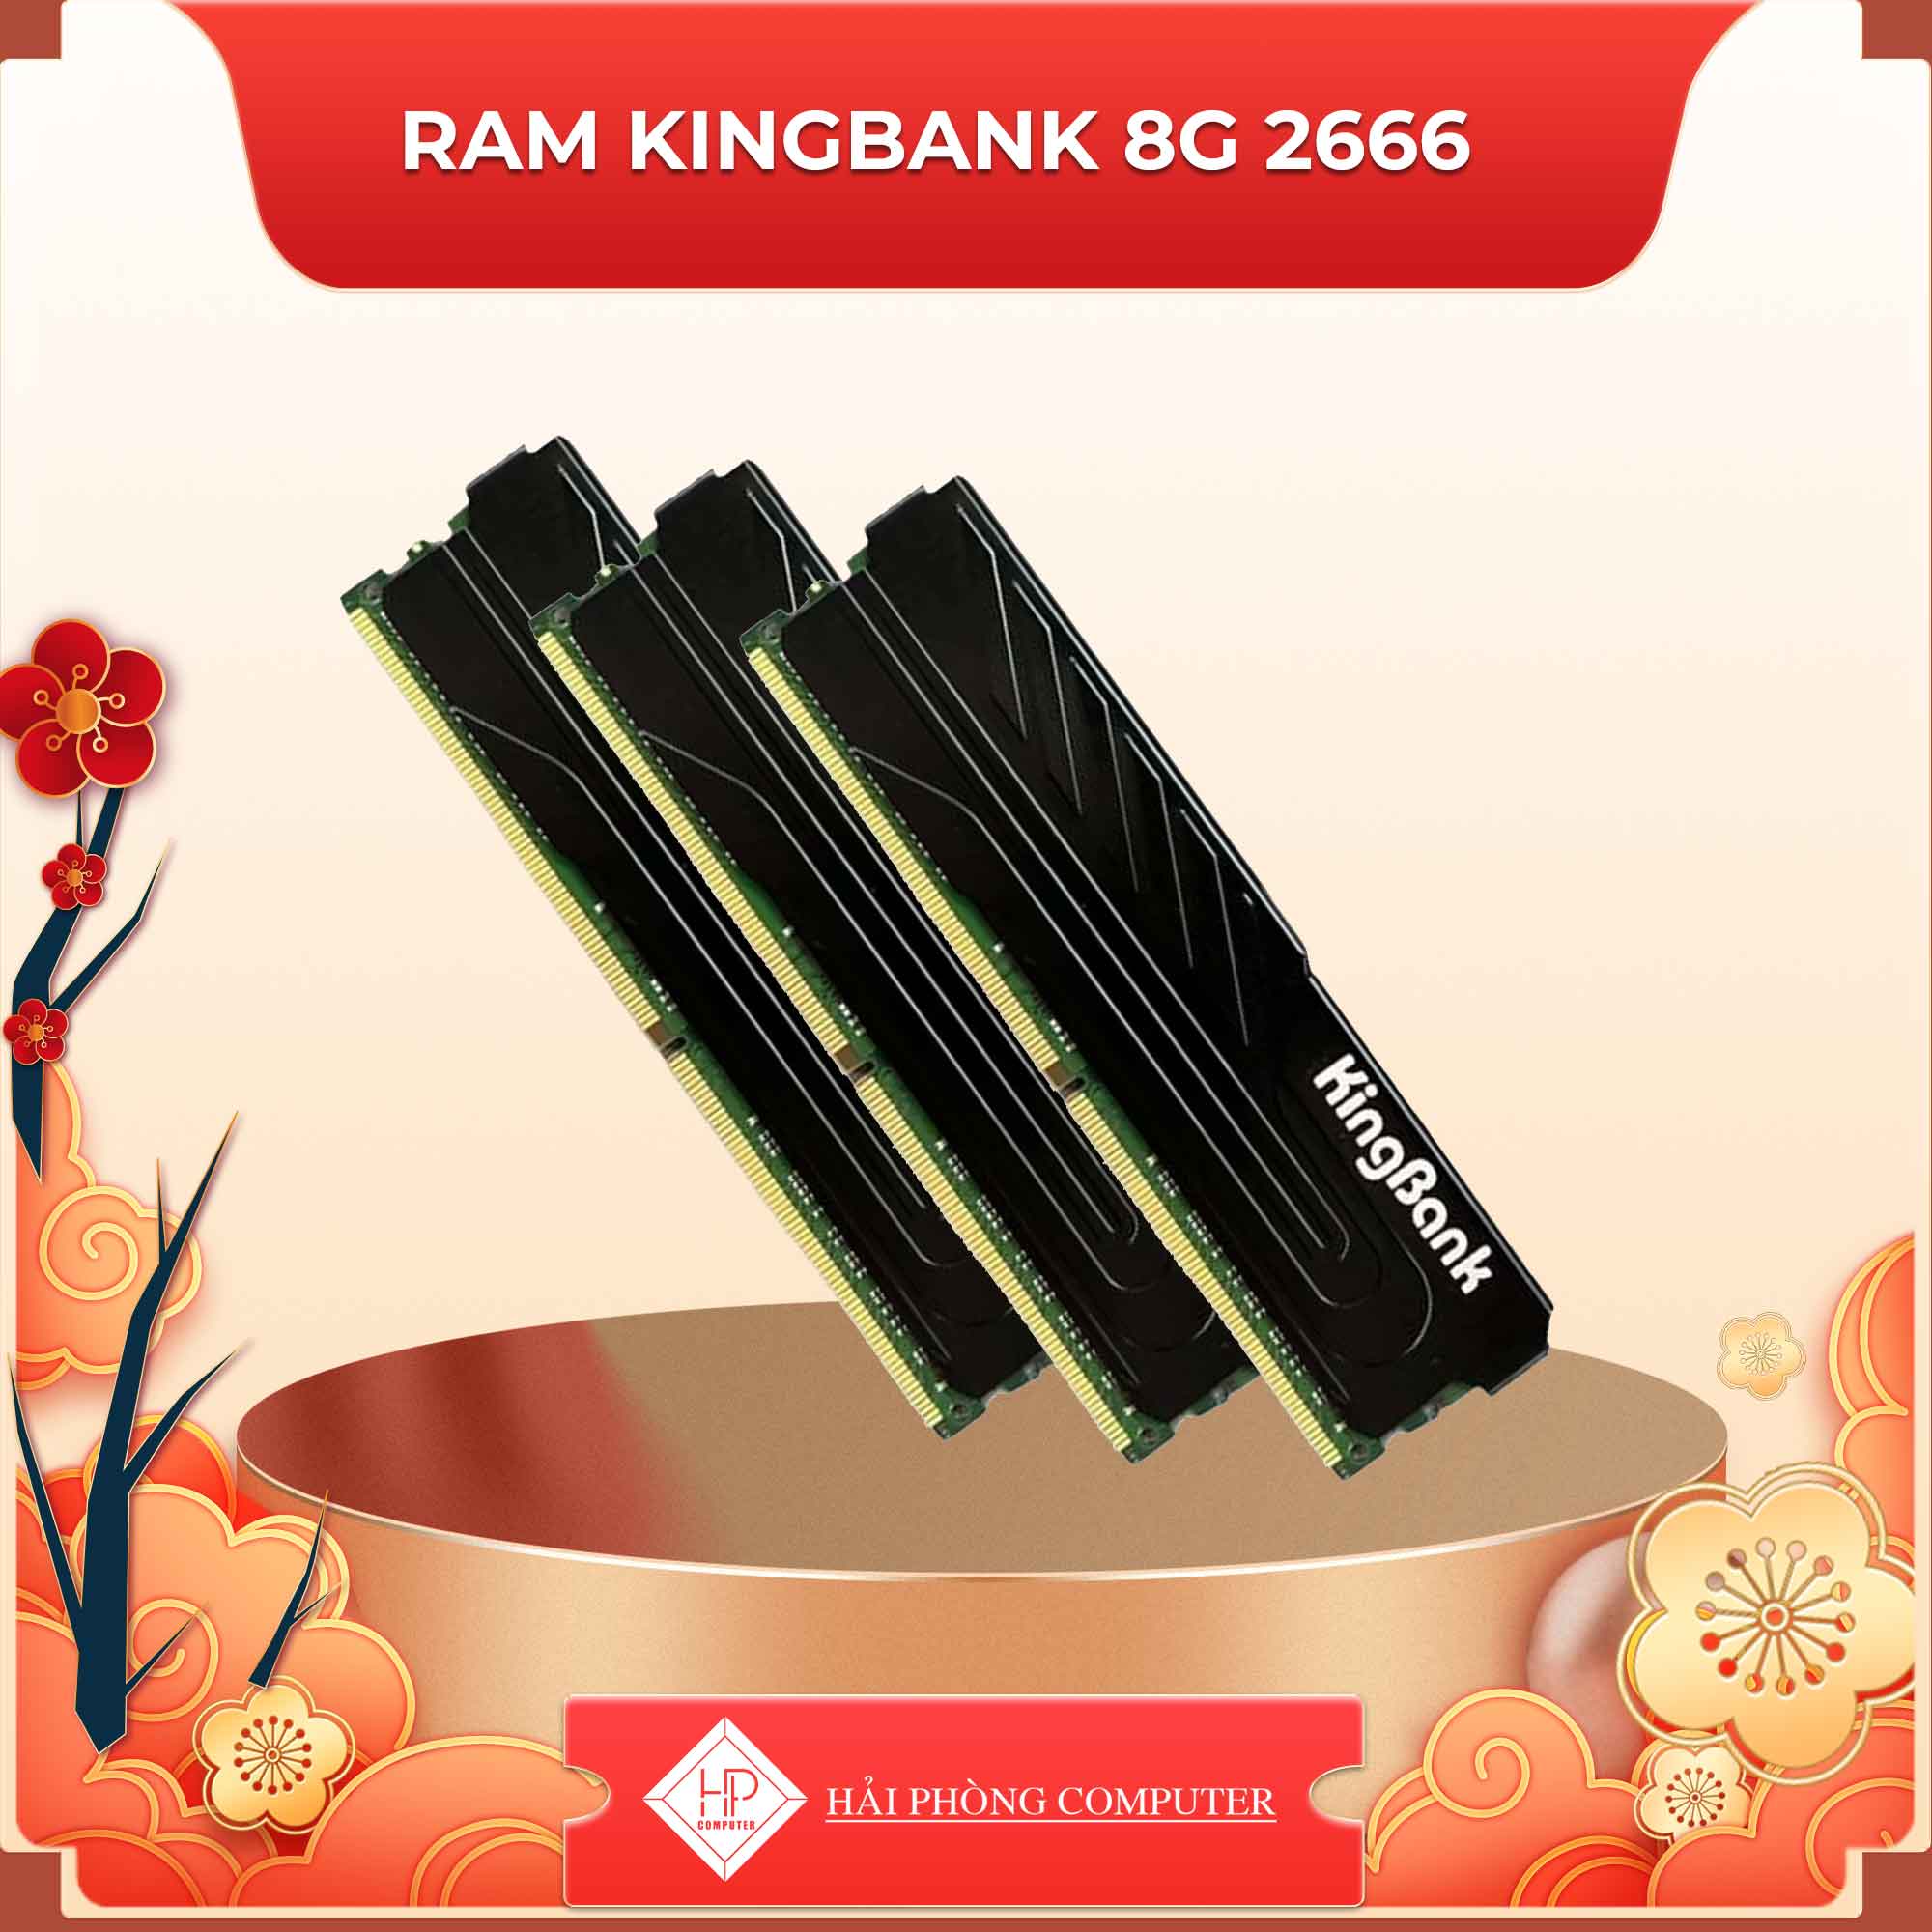 RAM KingBank 8G 2666